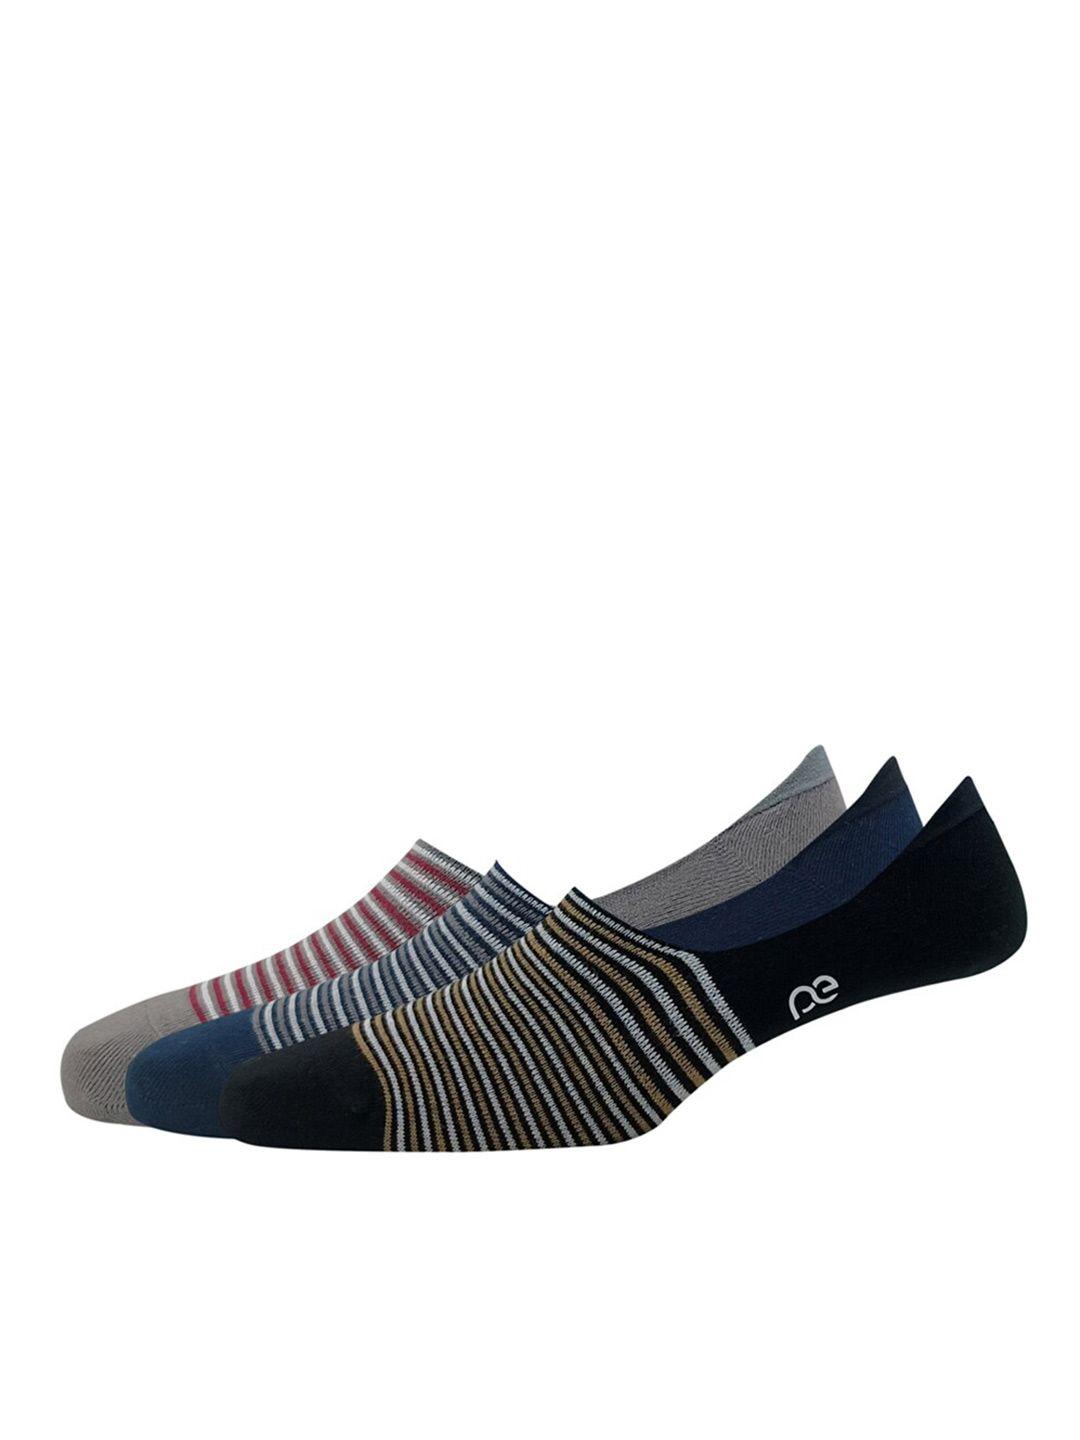 peter england men pack of 3 striped shoe liners socks